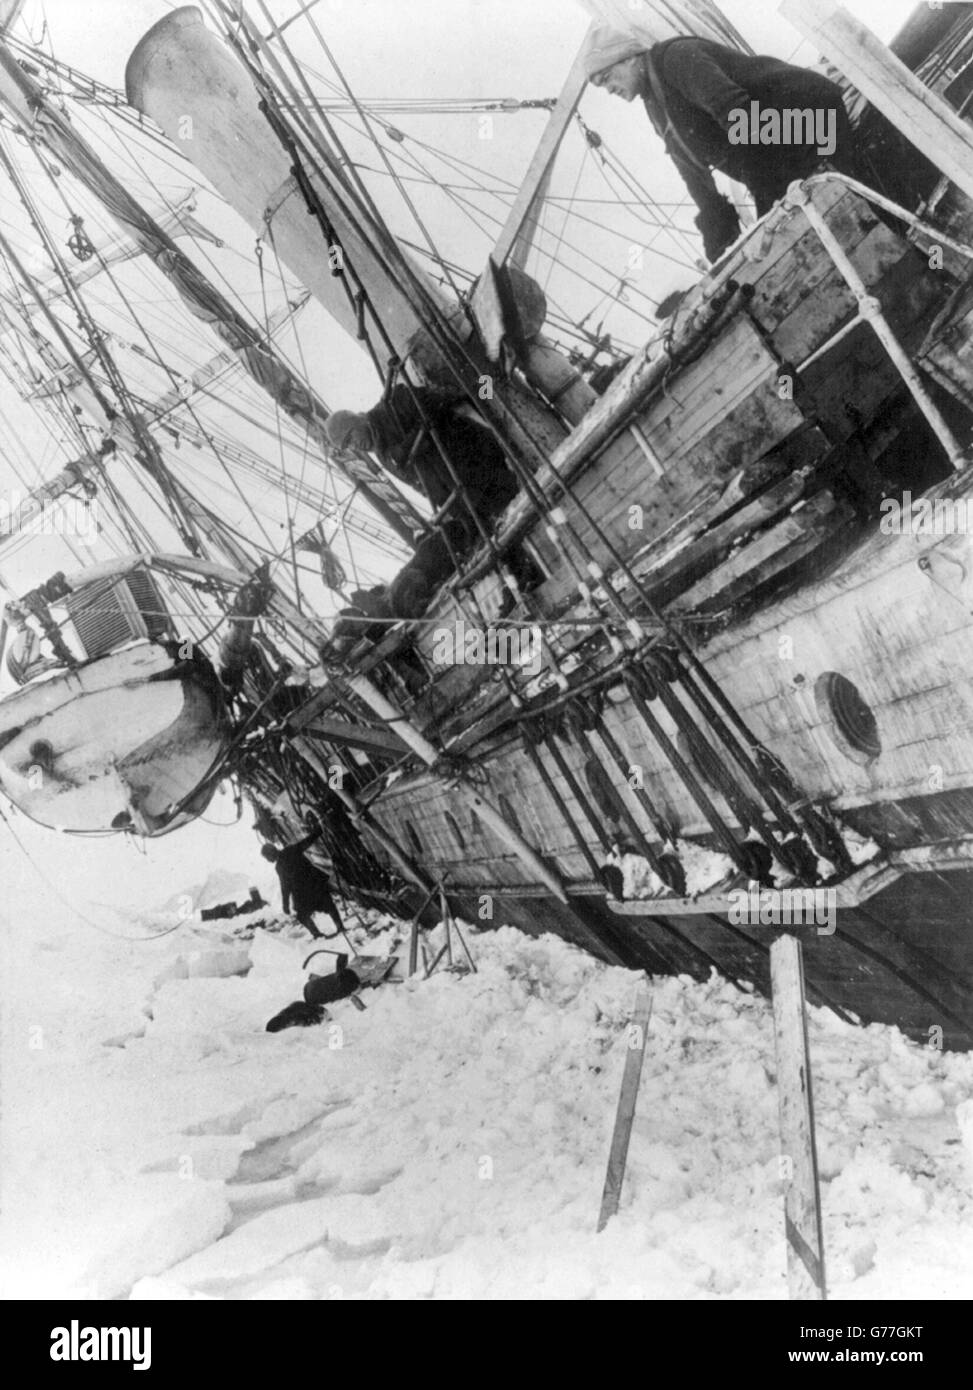 Ernest Shackleton, Endurance. Sir Ernest Shackleton, nave Endurance, intrappolati nel ghiaccio durante il 1914/15 Imperial Trans-Antarctic Expedition. Foto Stock